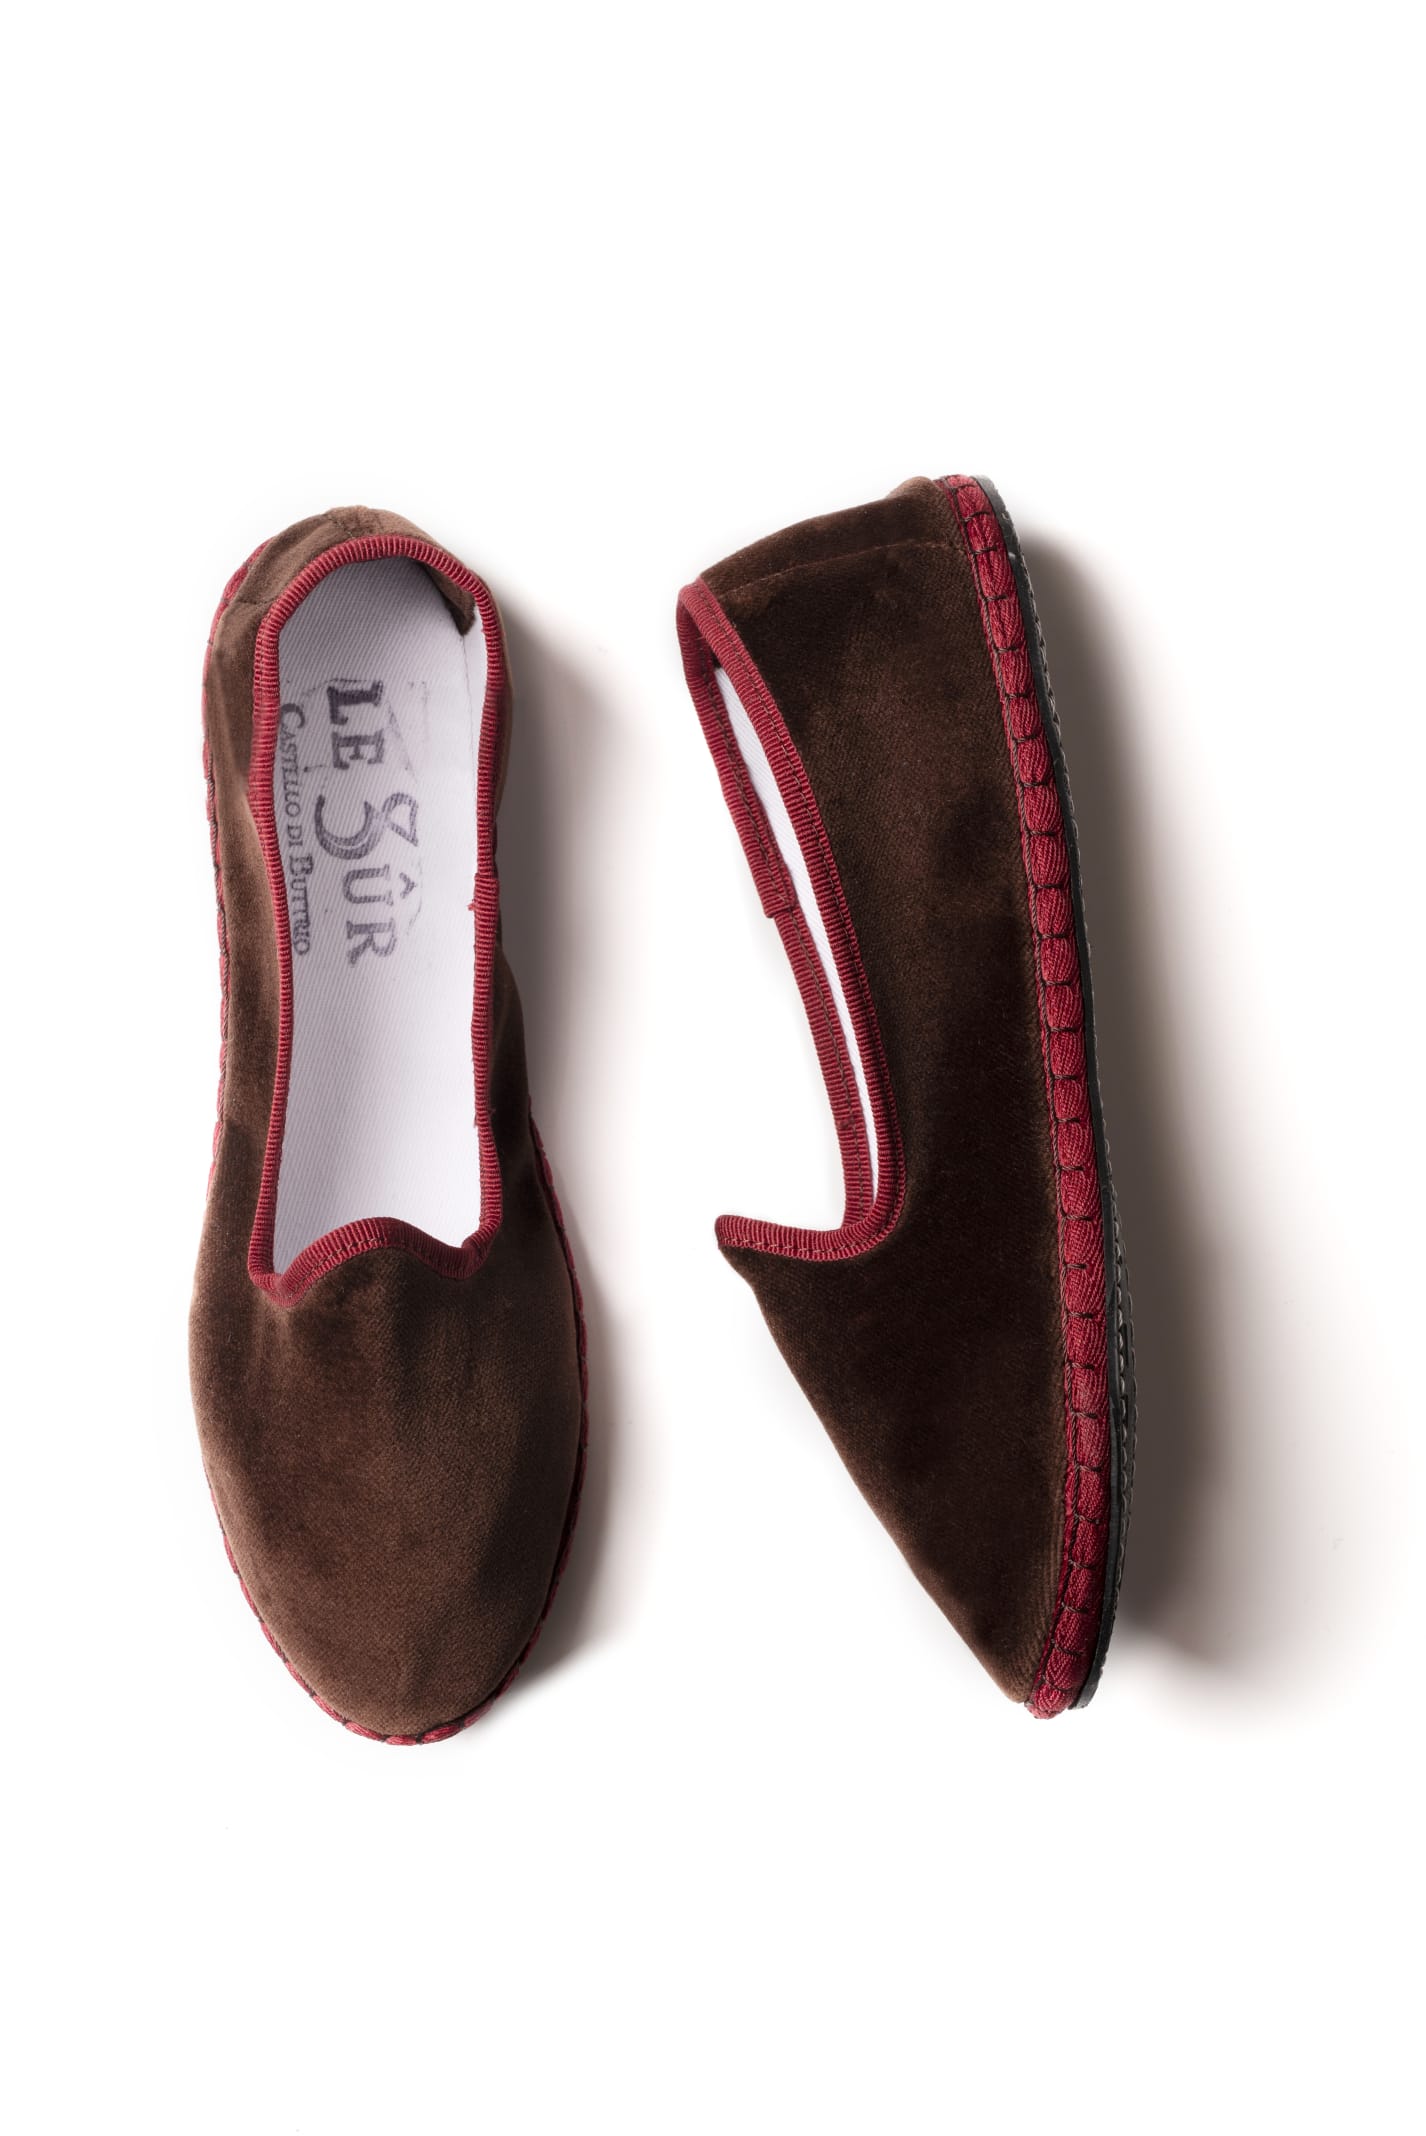 Shop Le Sur Friulana Loafer In Brown & Red